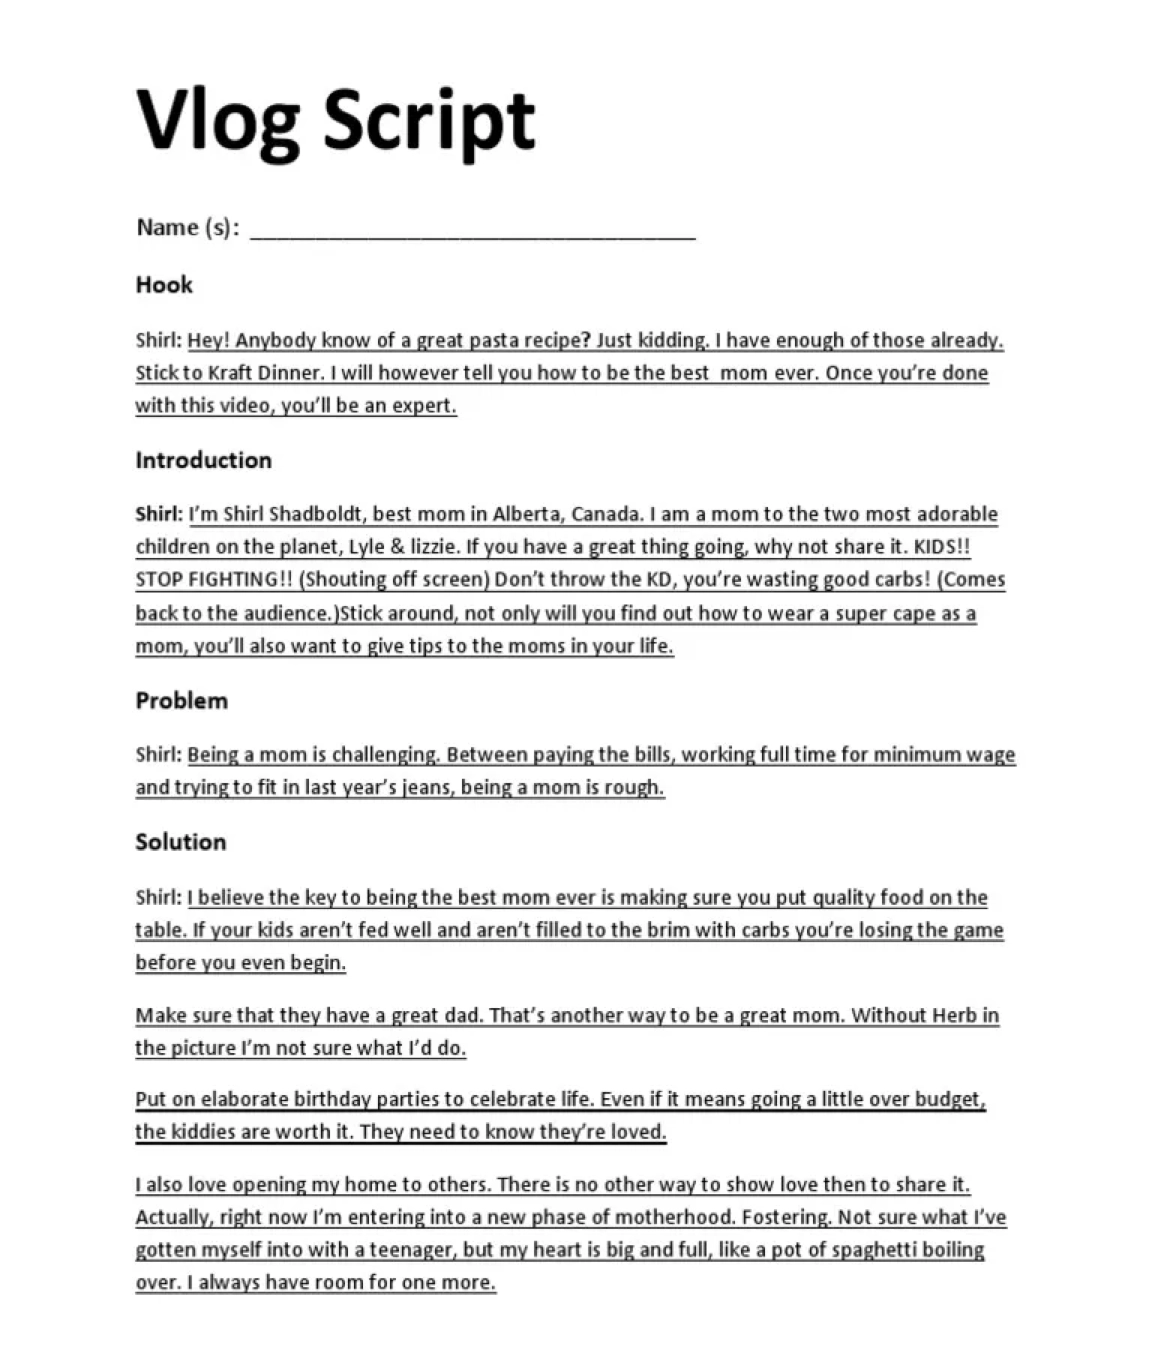 Example of vlog script: